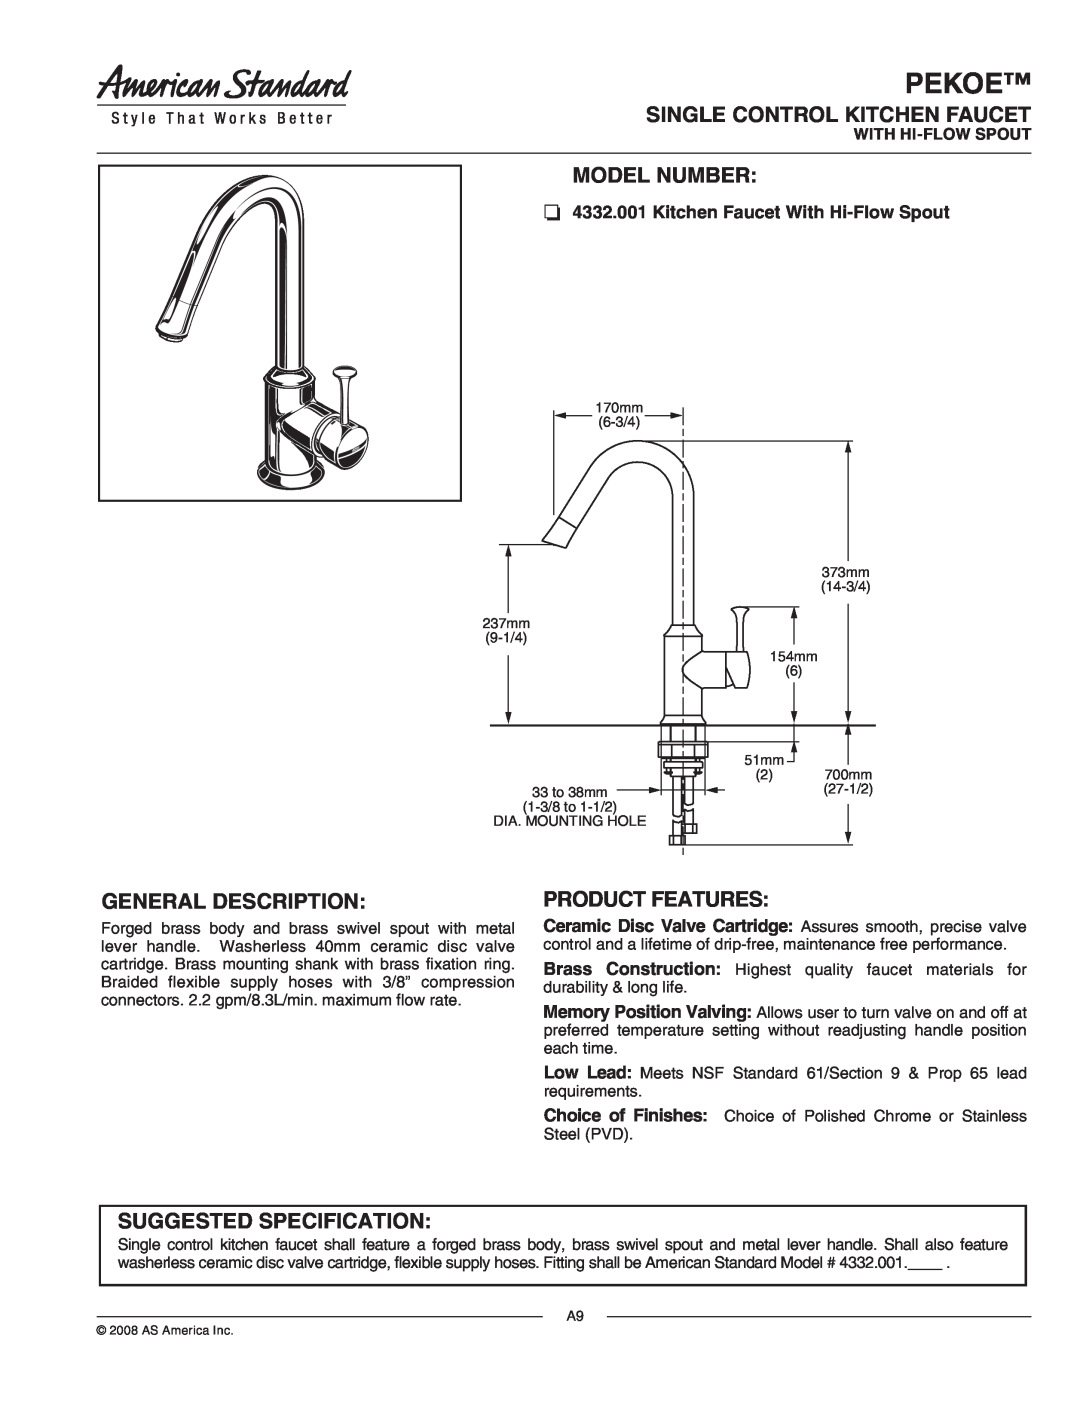 American Standard 4332.001 specifications Pekoe, Single Control Kitchen Faucet, Model Number, General Description 